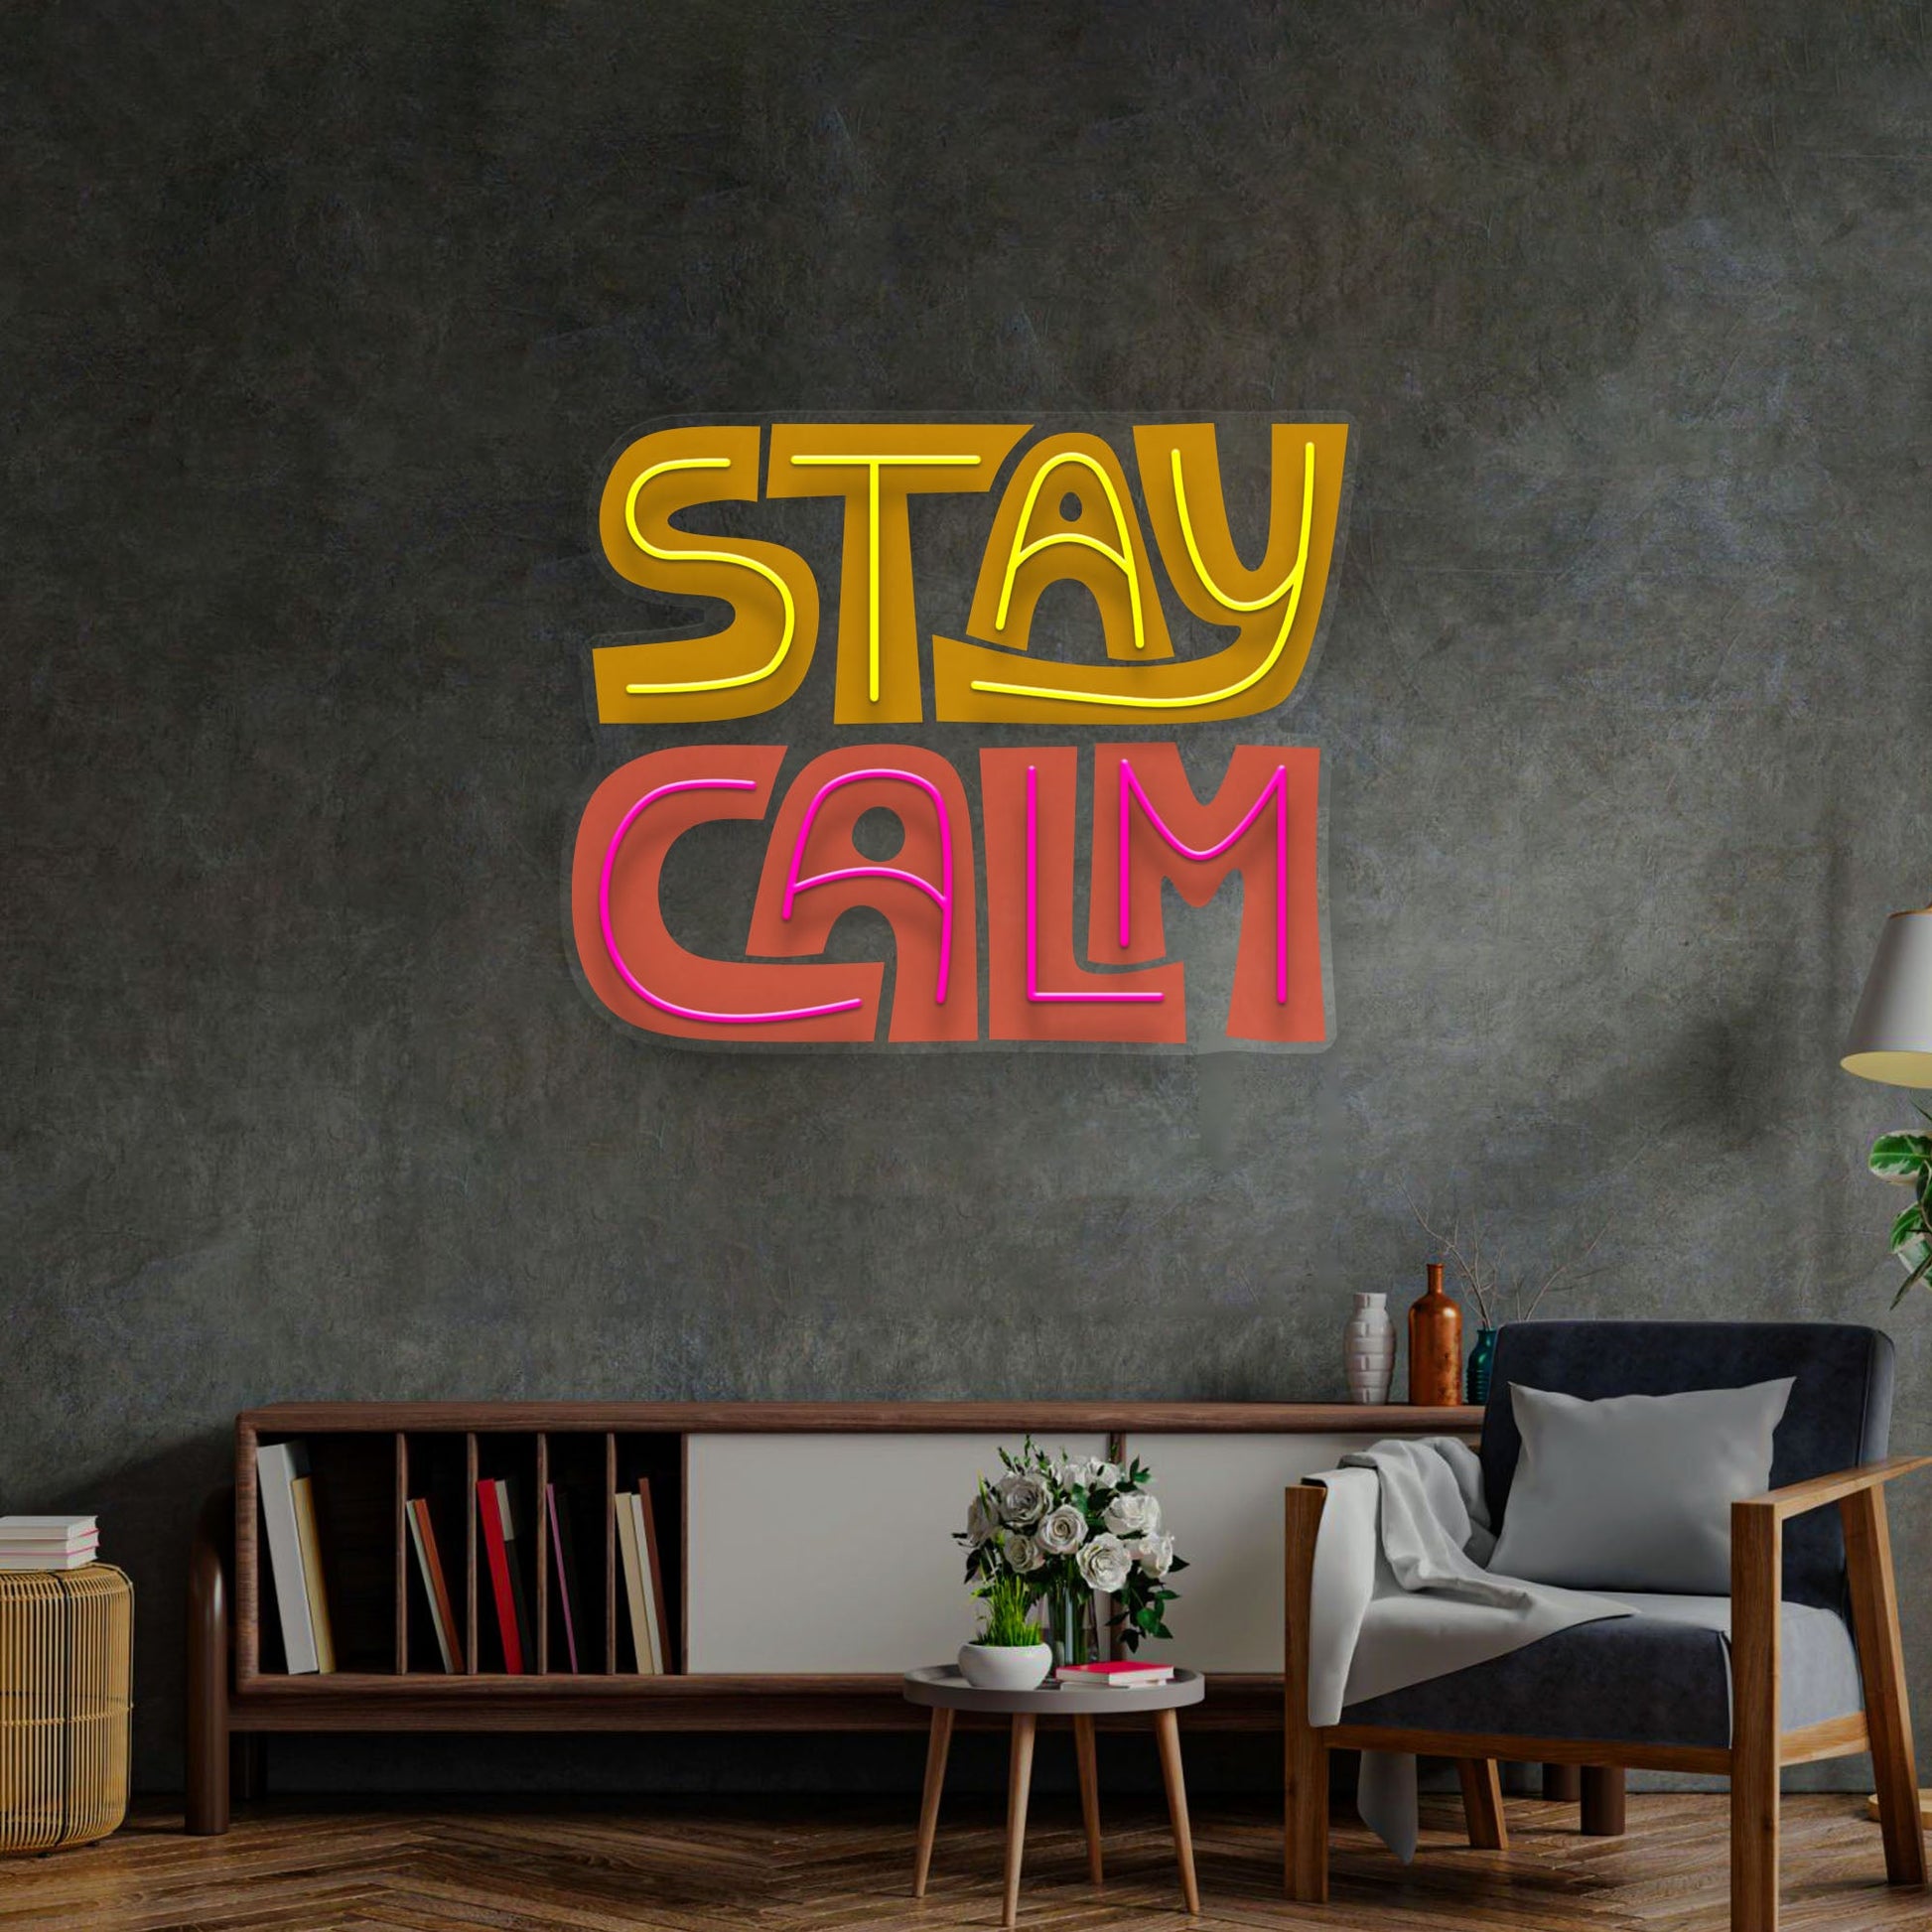 Stay Calm LED Neon Sign Light Pop Art - Neonzastudio